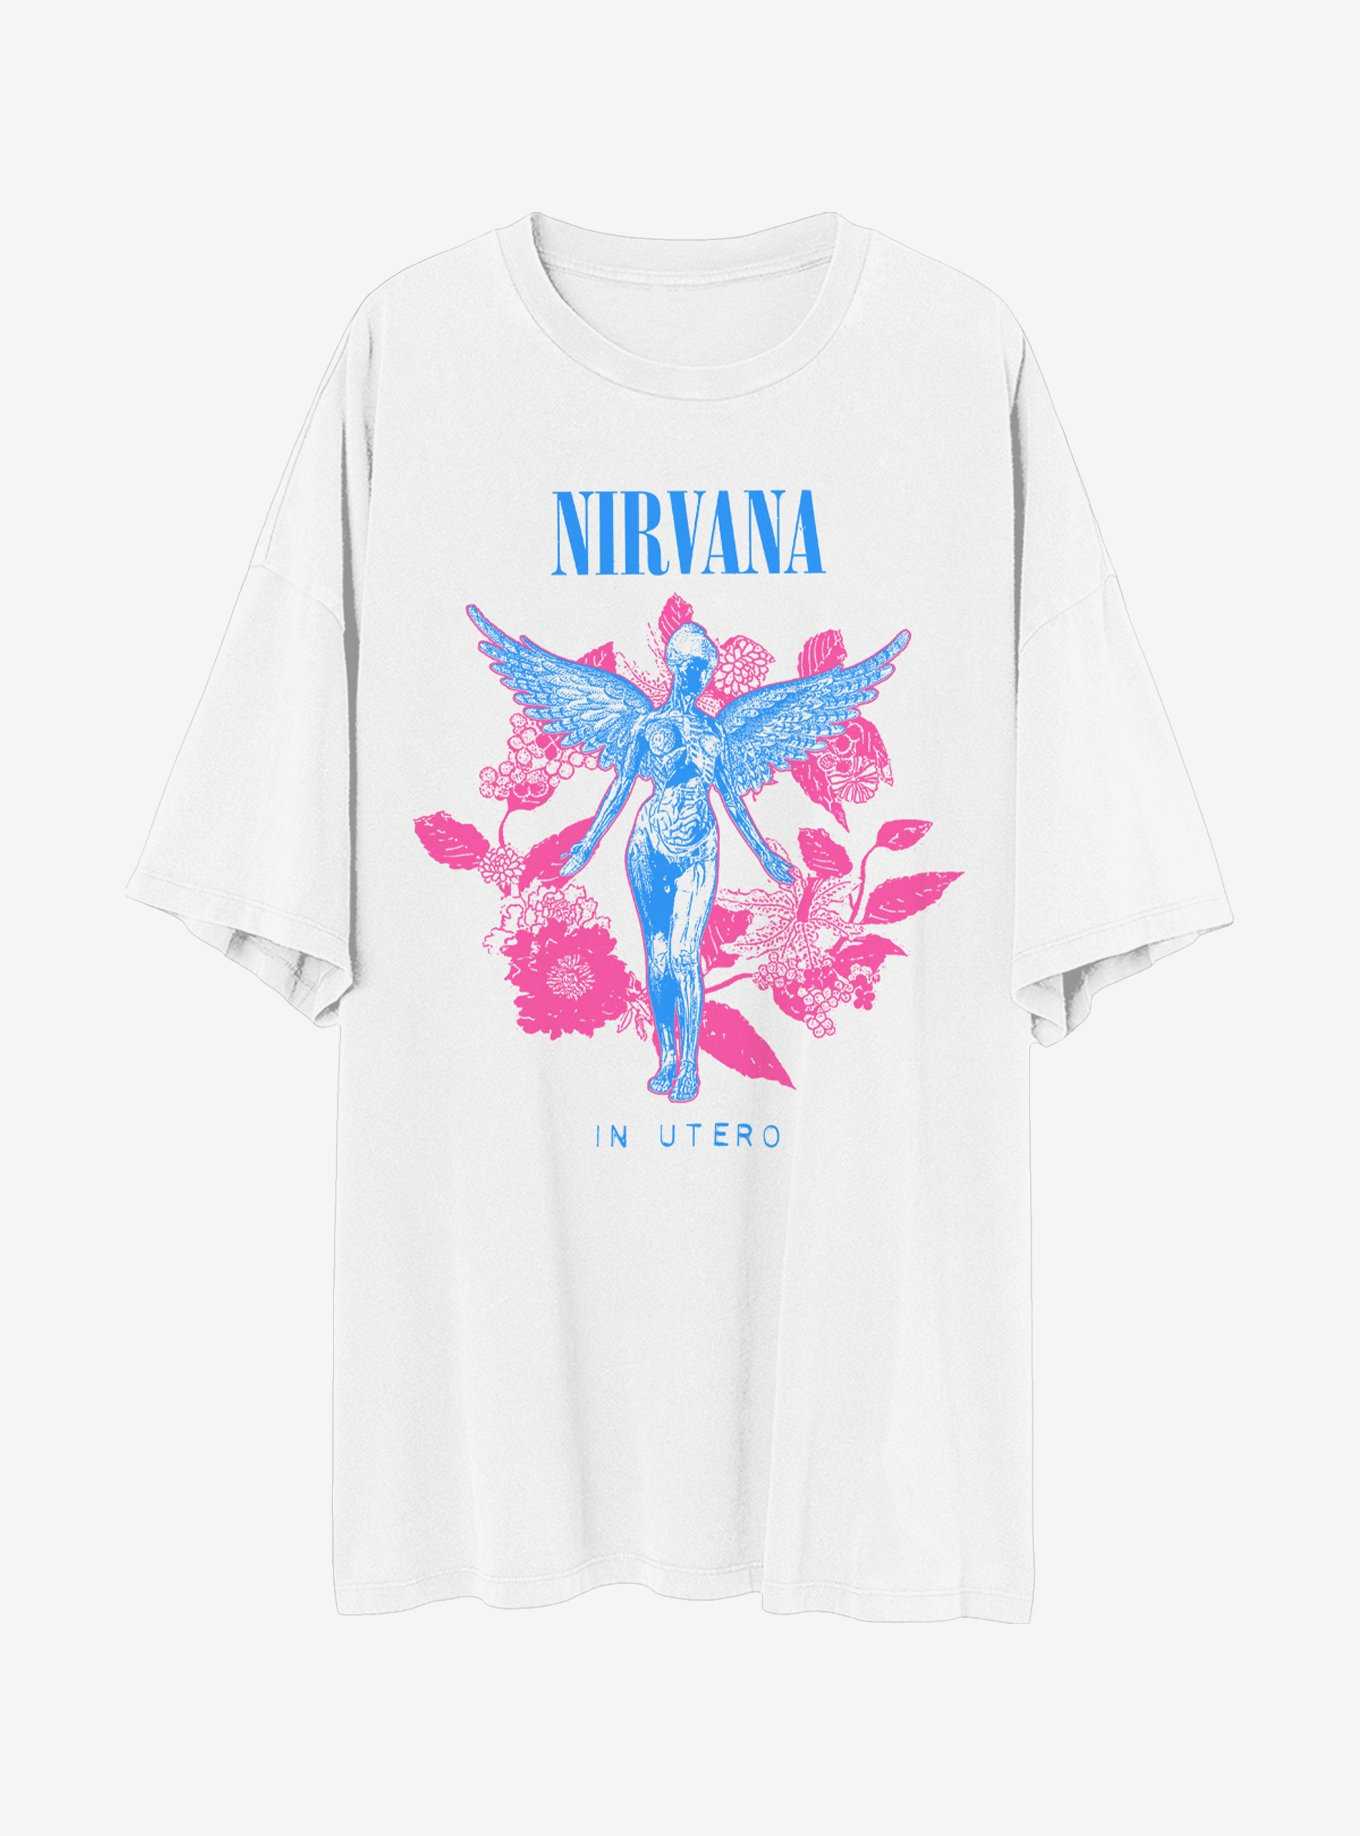 Nirvana In Utero Boyfriend Fit Girls T-Shirt, , hi-res